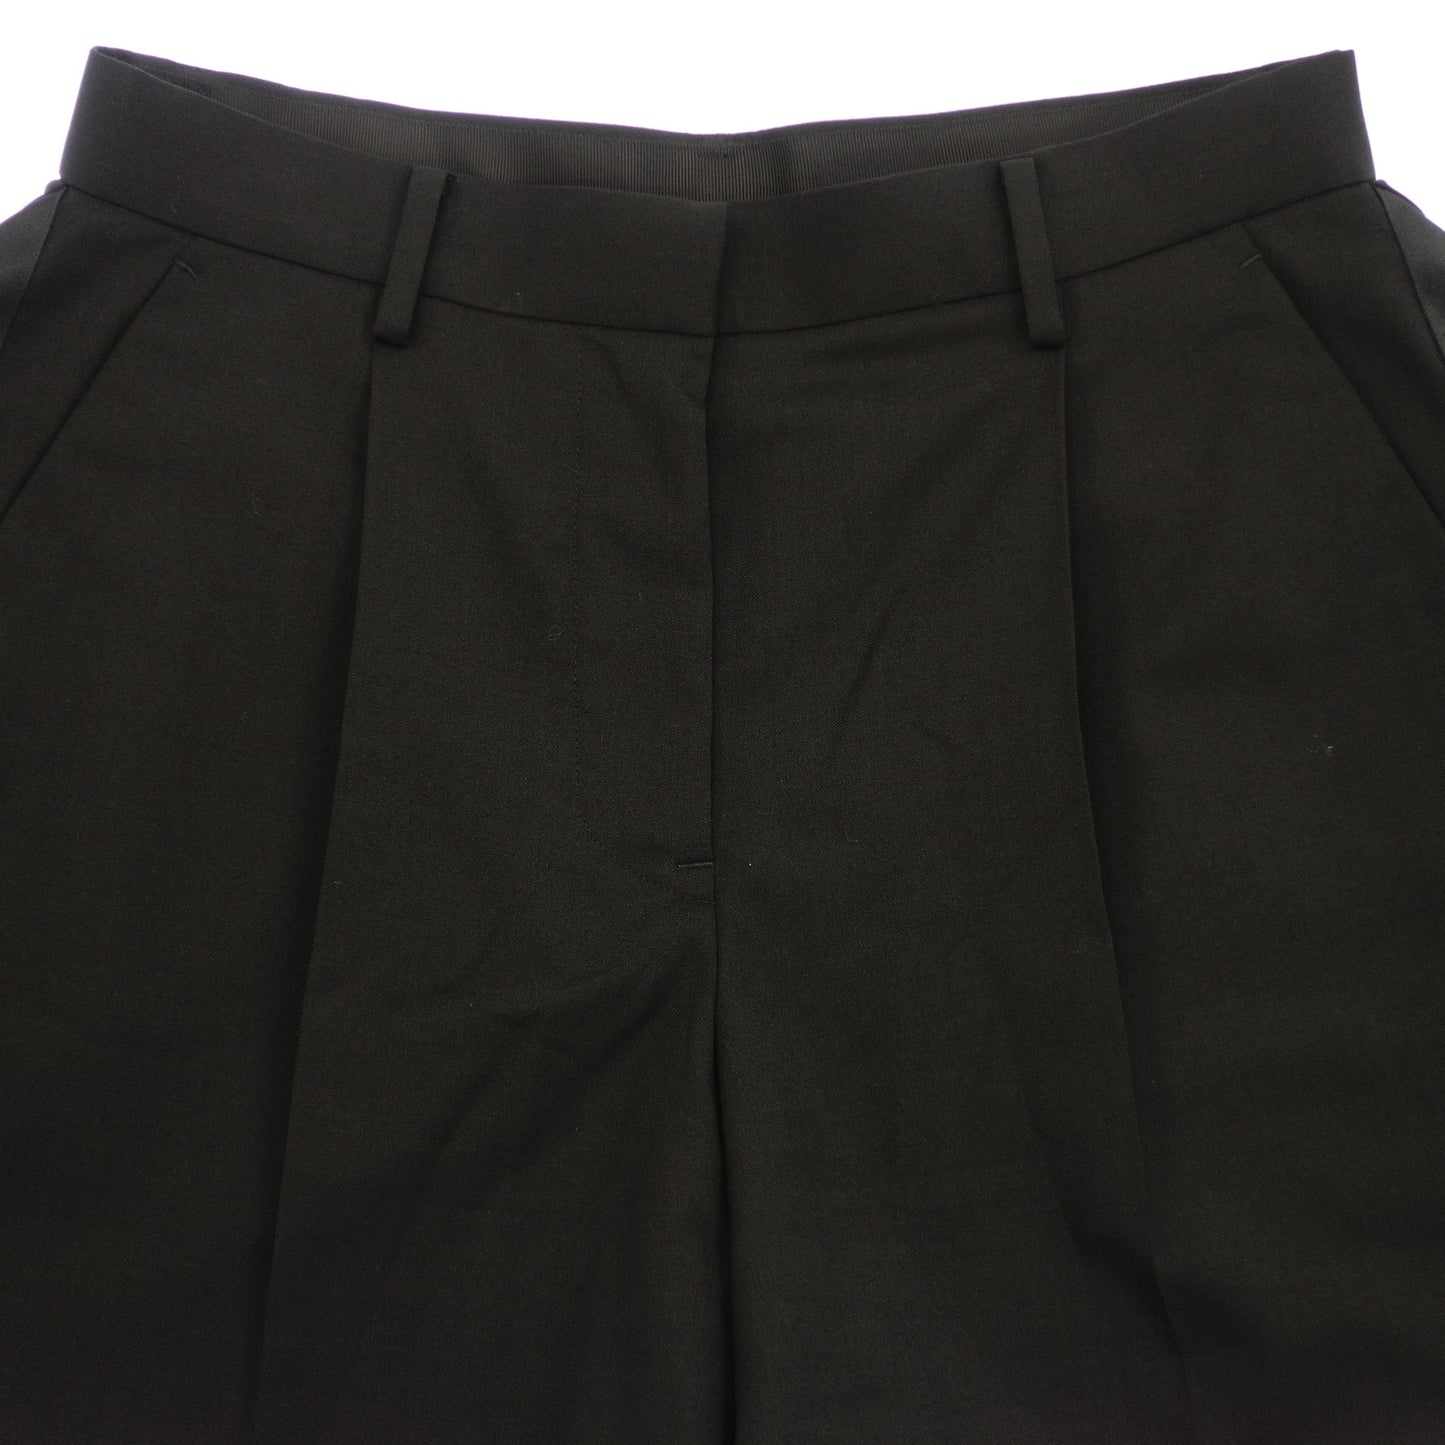 Good condition◆Sacai shorts asymmetrical shorts 21-05402 black size 3 ladies sacai [AFB32] 